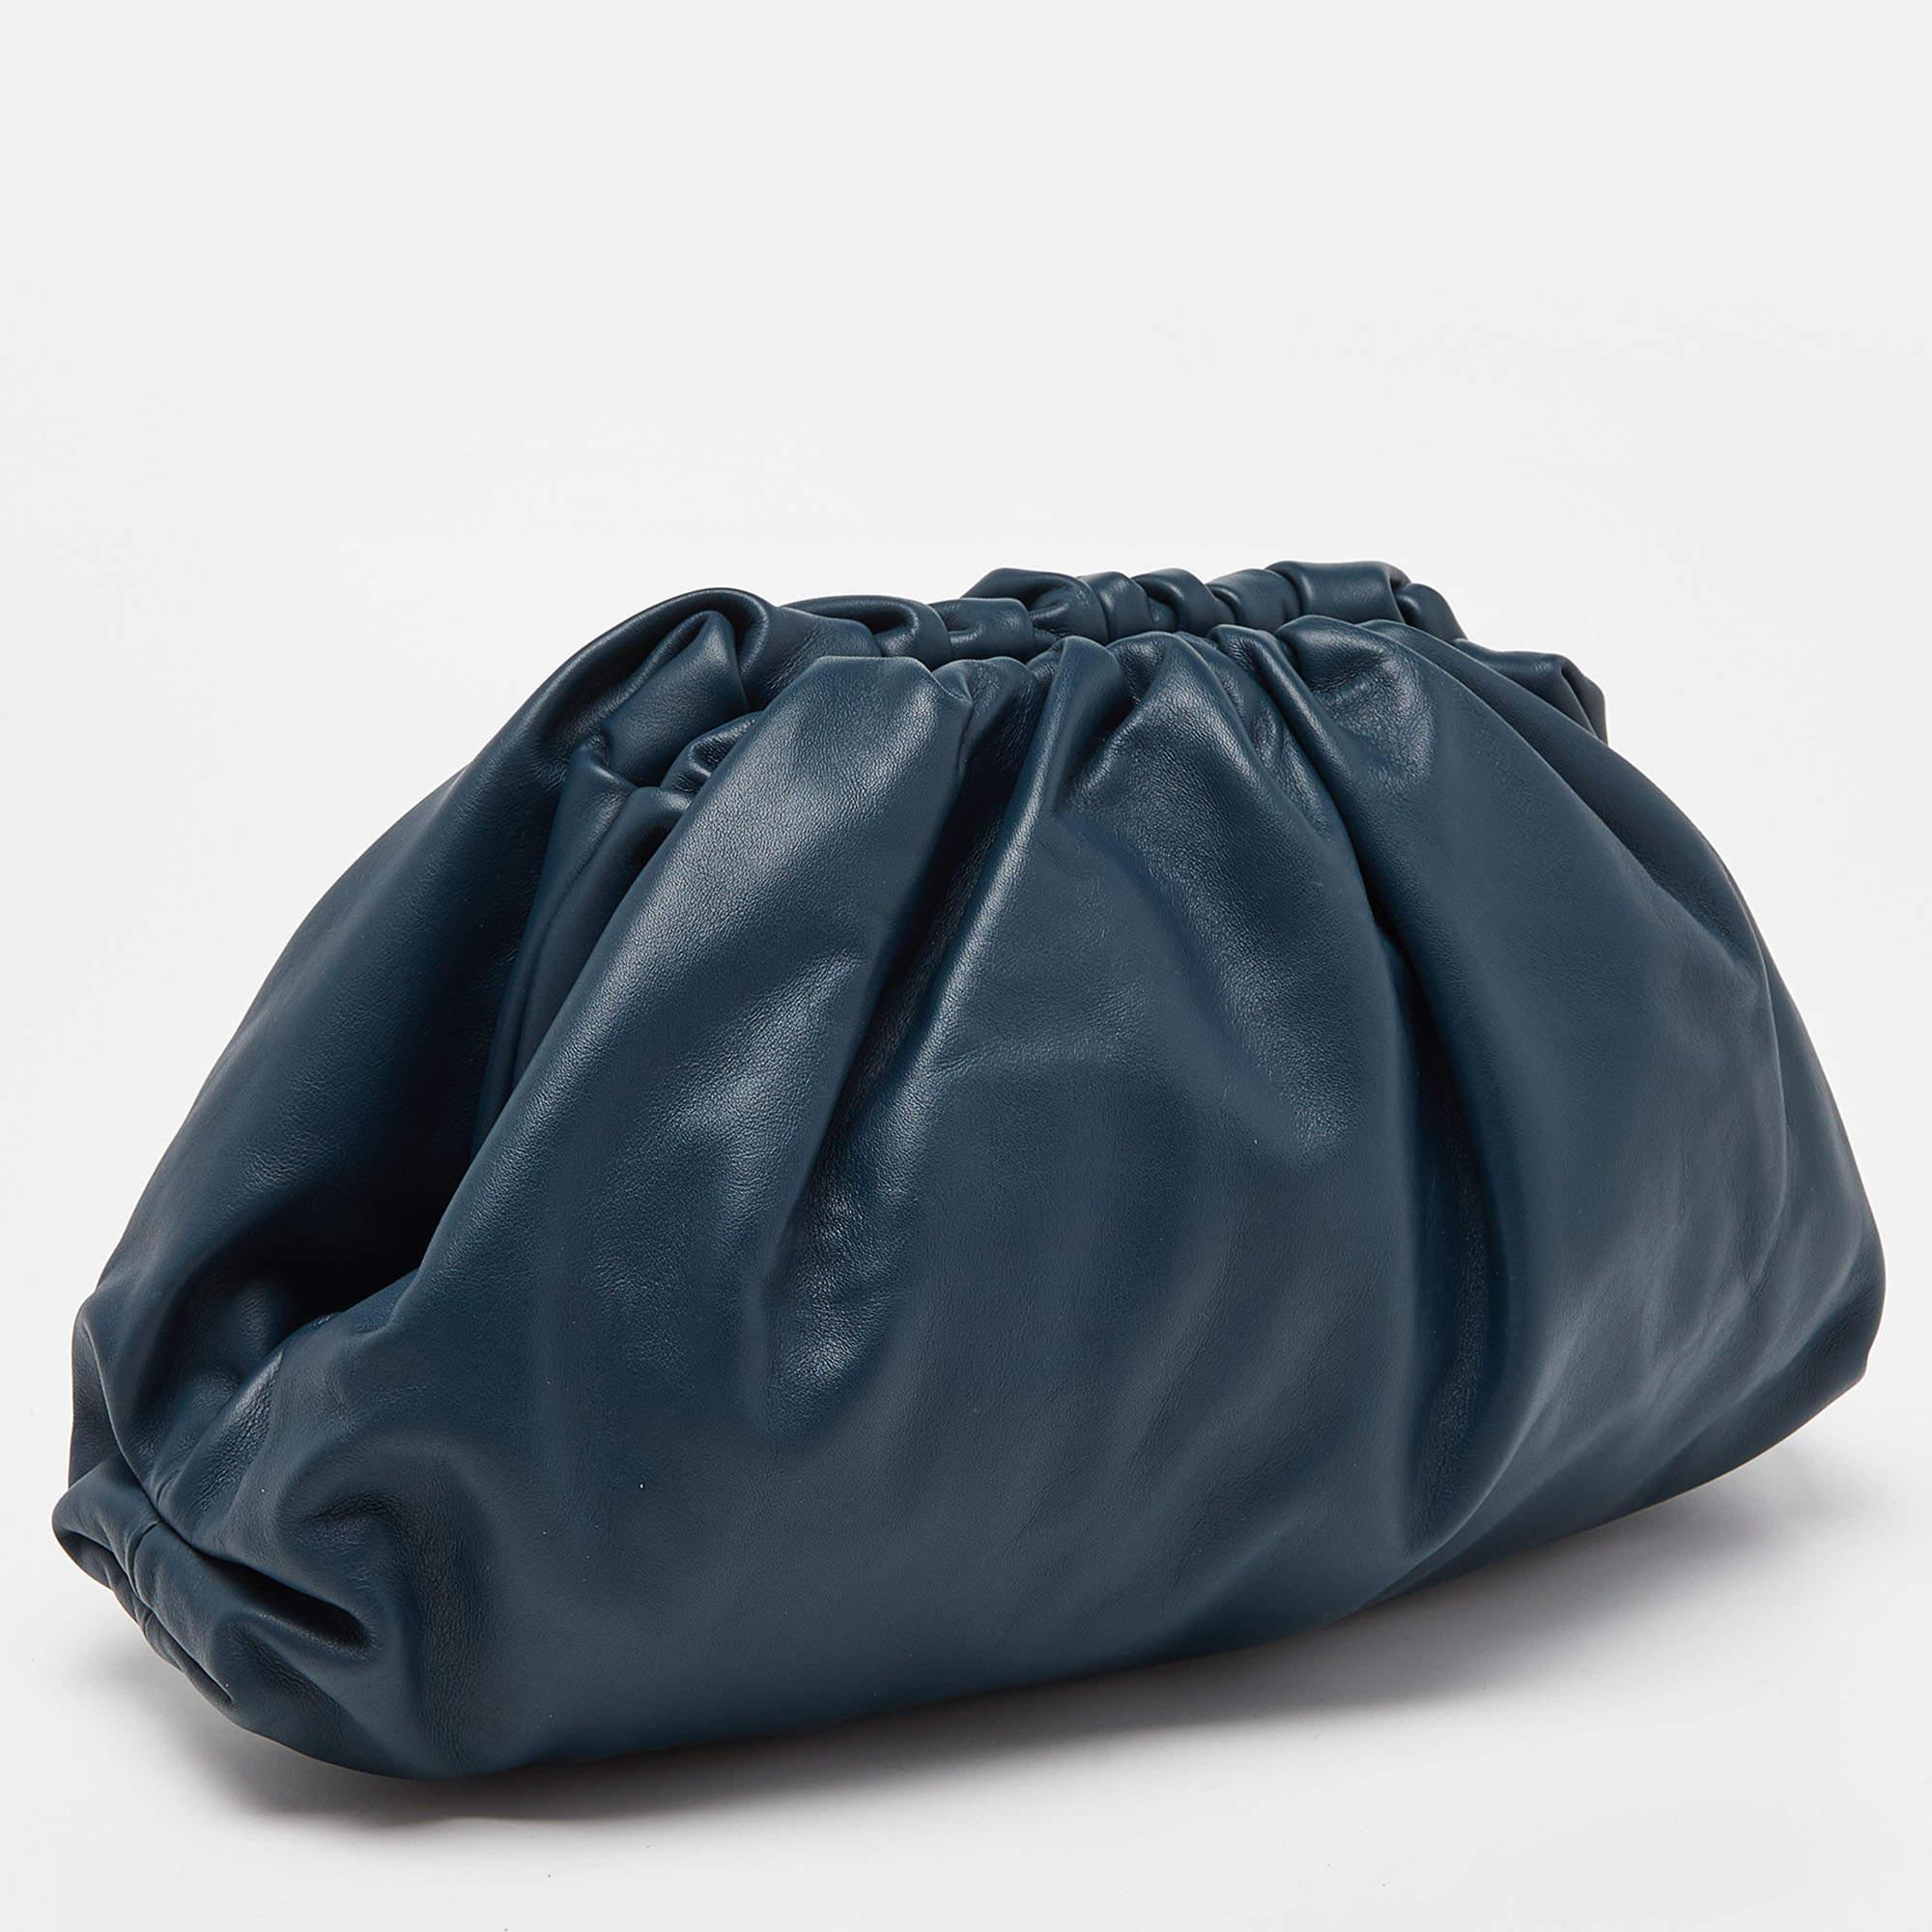 Bottega Veneta Teal Blue Leather The Pouch Clutch In Good Condition For Sale In Dubai, Al Qouz 2